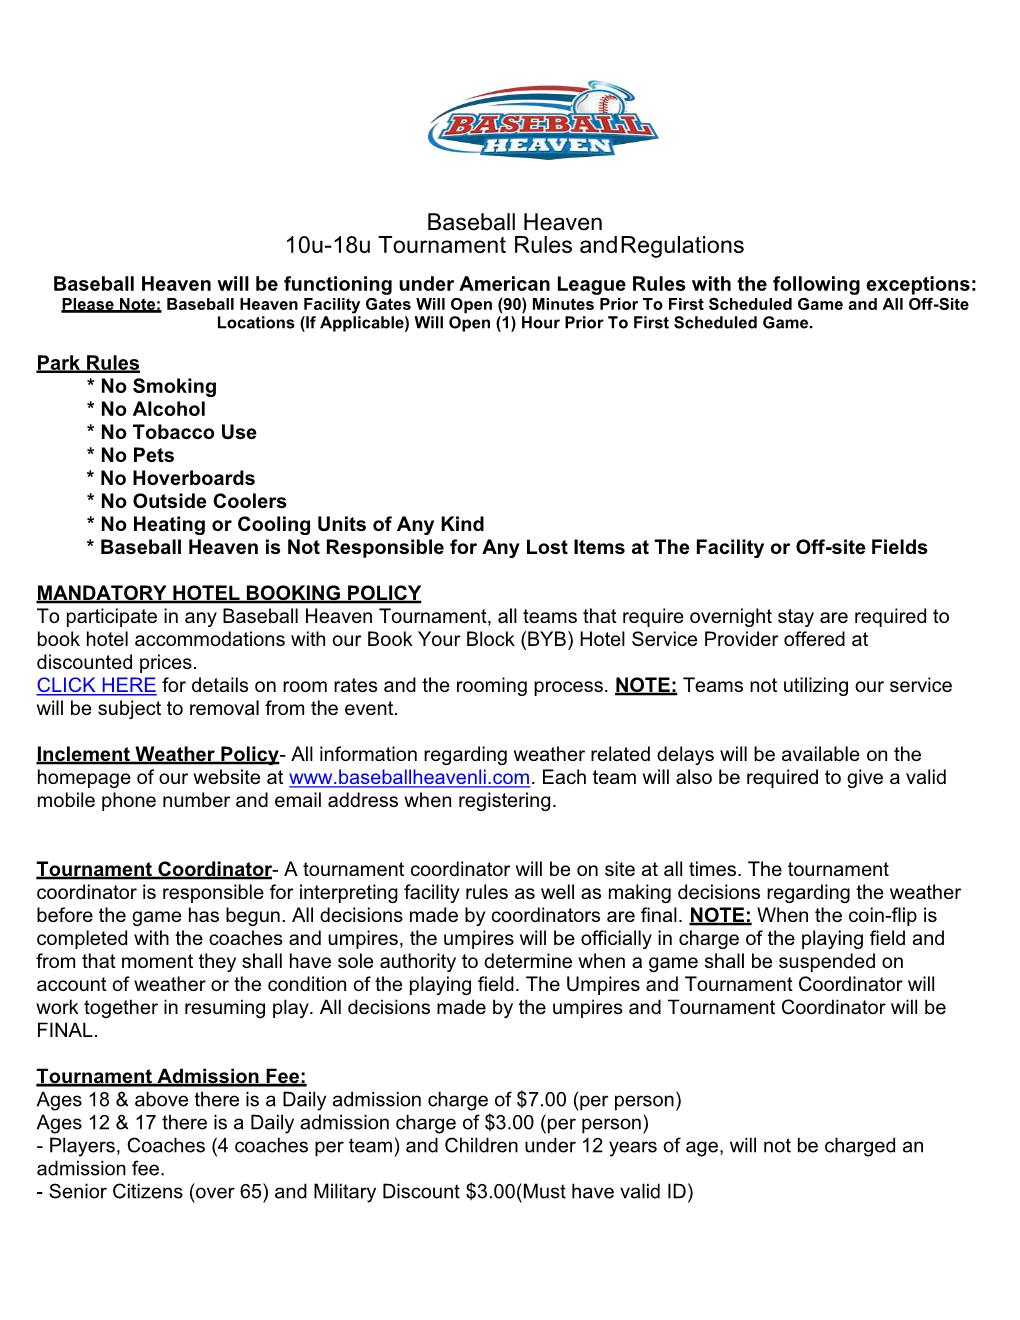 Baseball Heaven 10U-18U Tournament Rules and Regulations